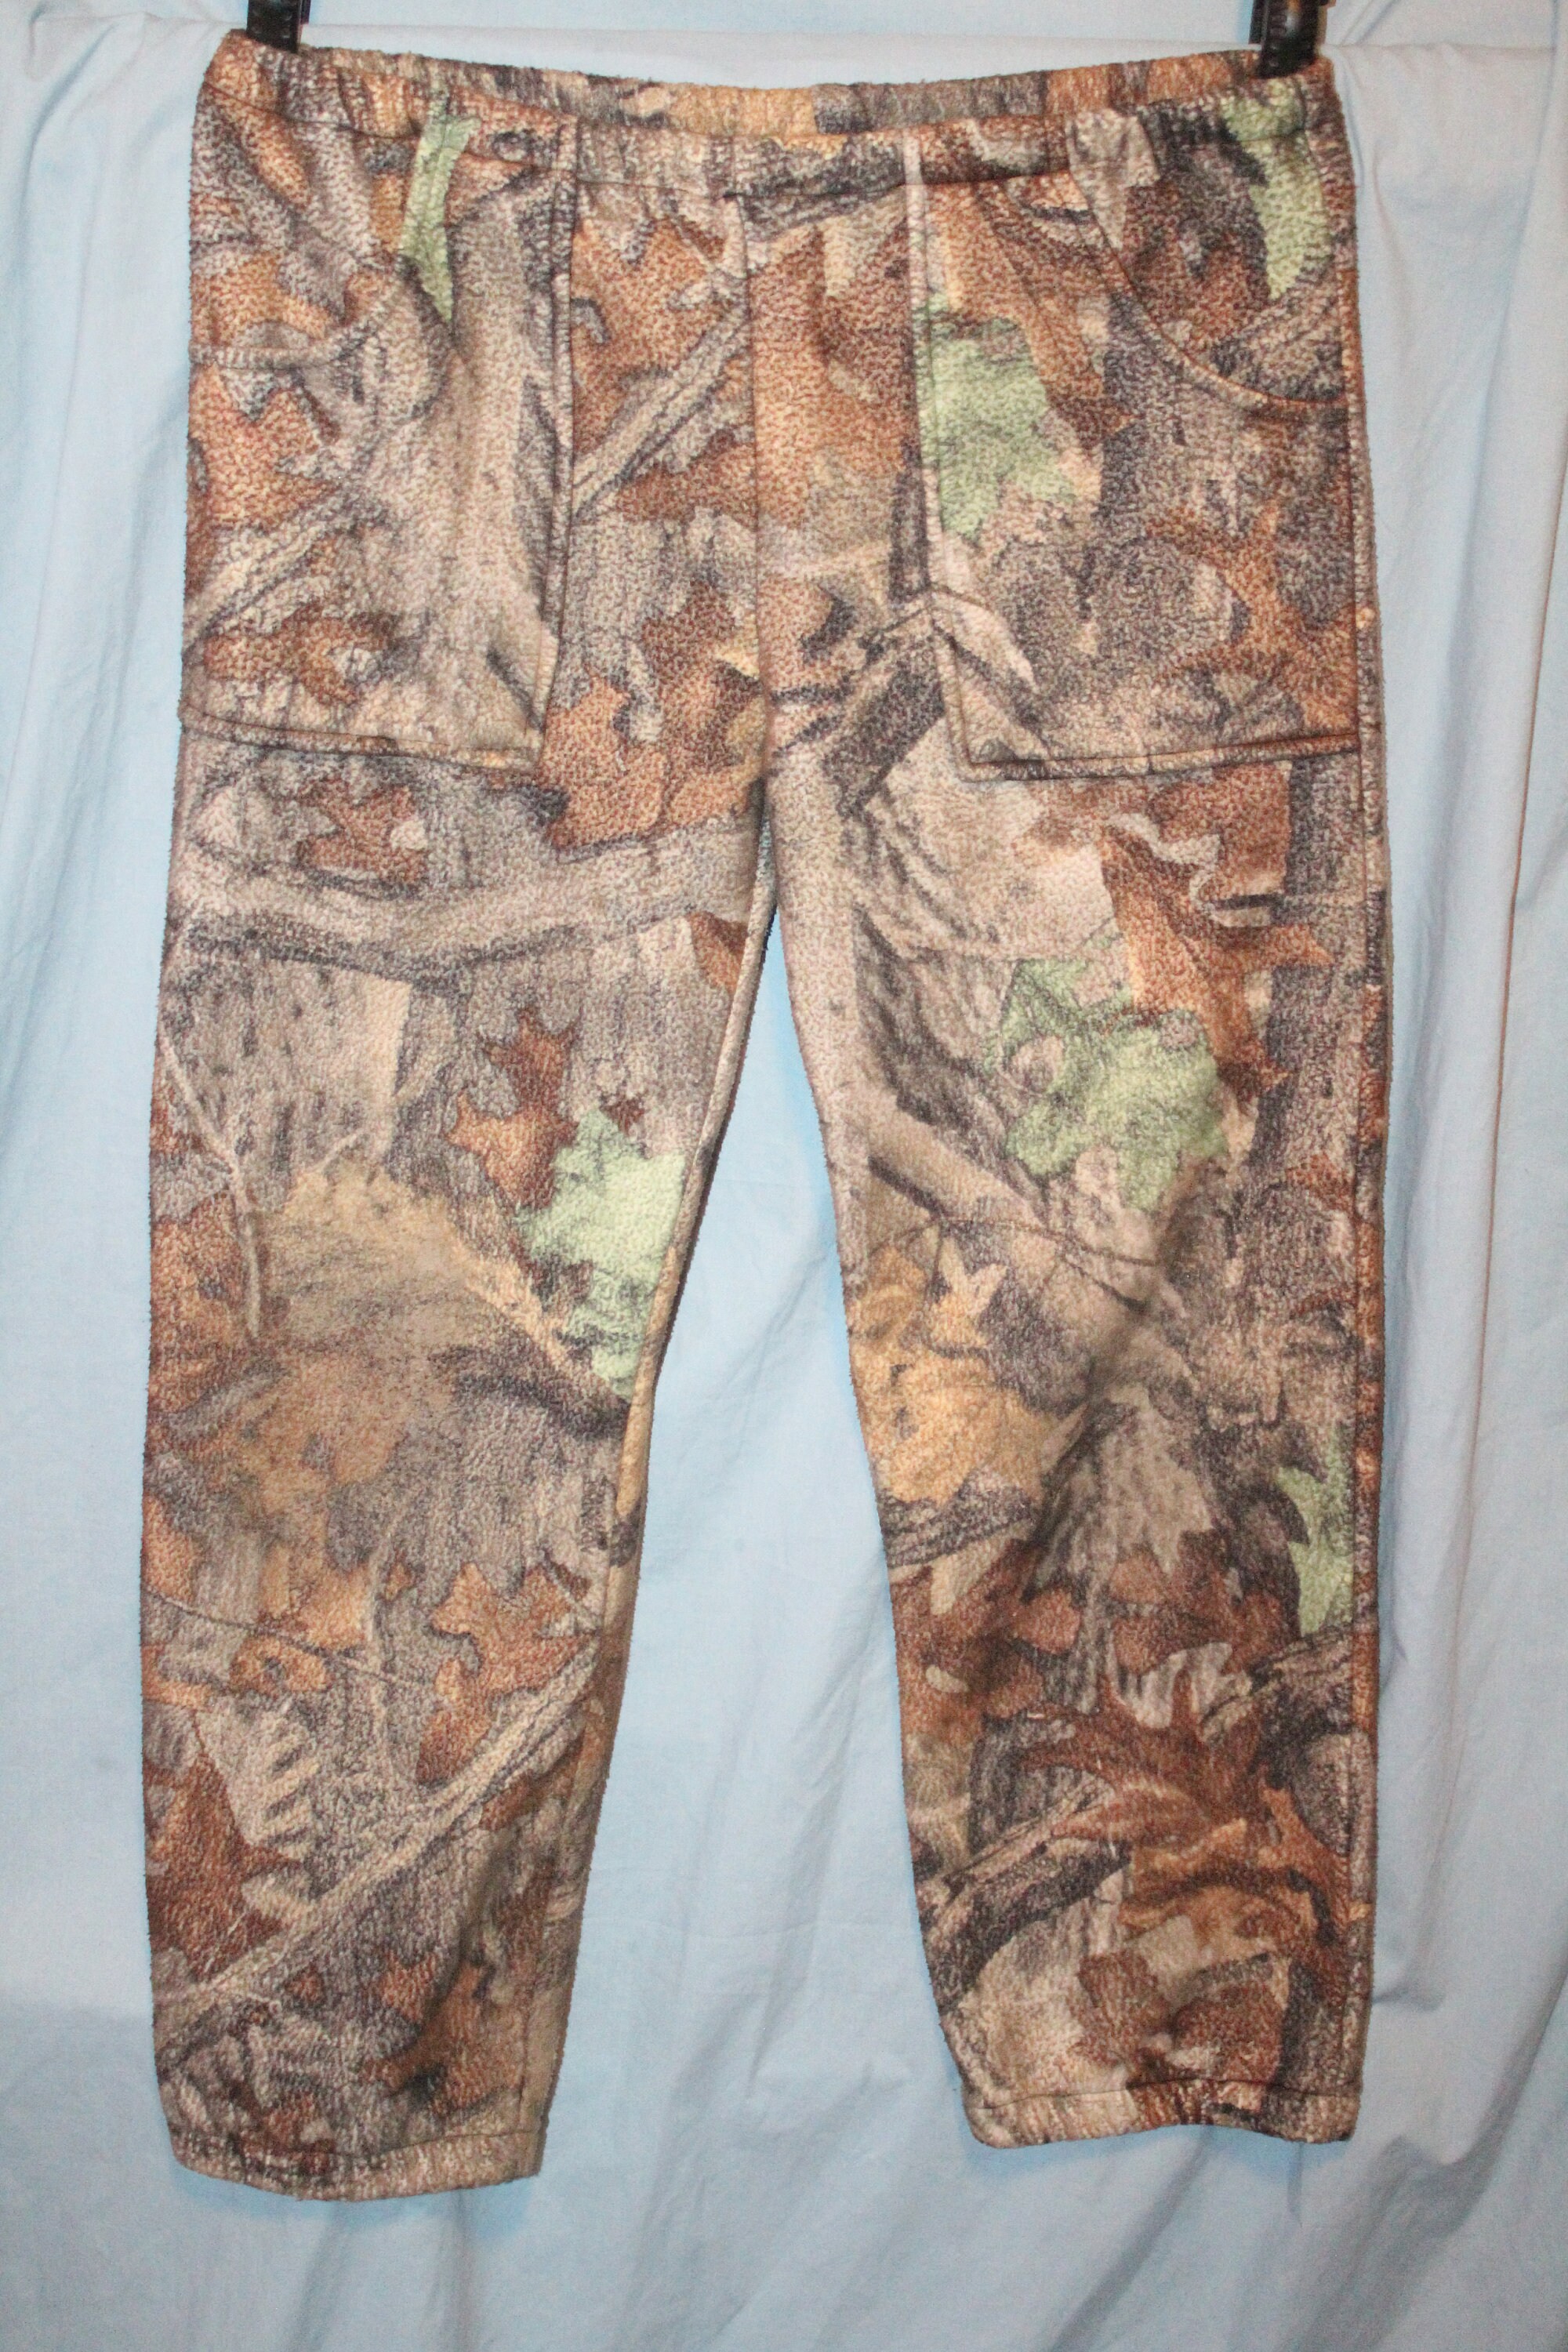 American Outfitter Garments Advantage Camo Camouflage Fleece - Etsy